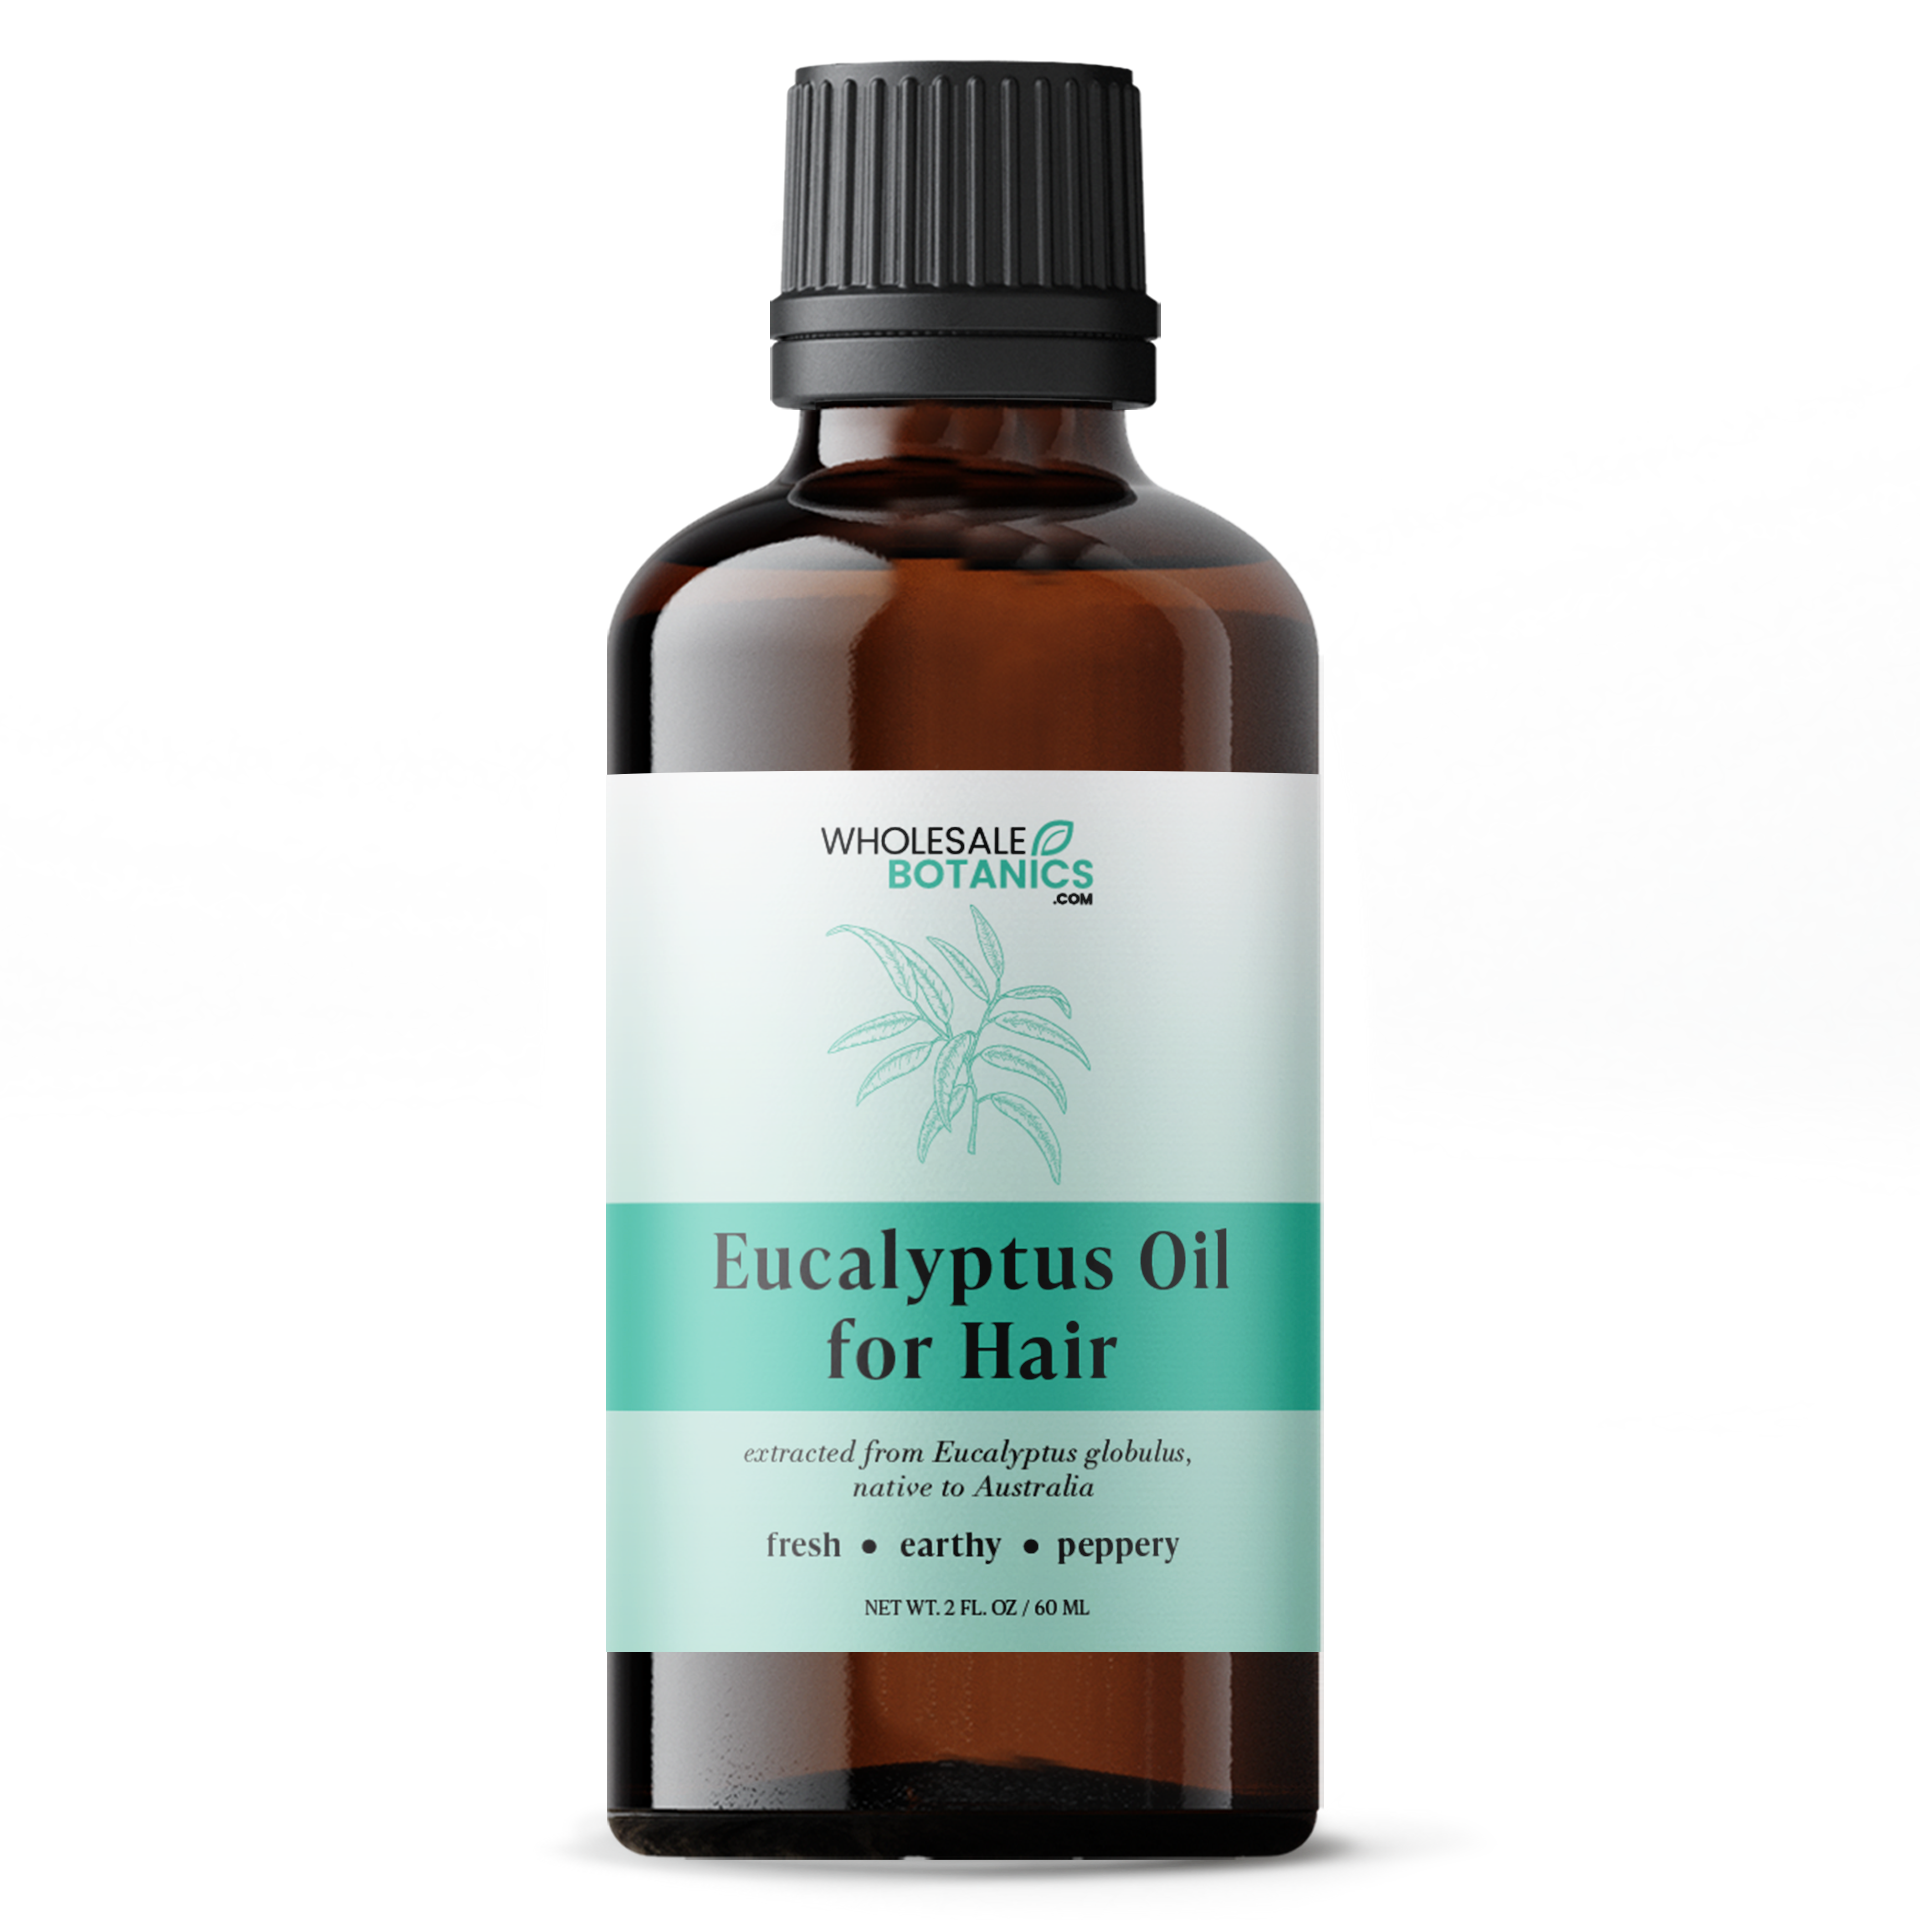 Eucalyptus Oil for Hair